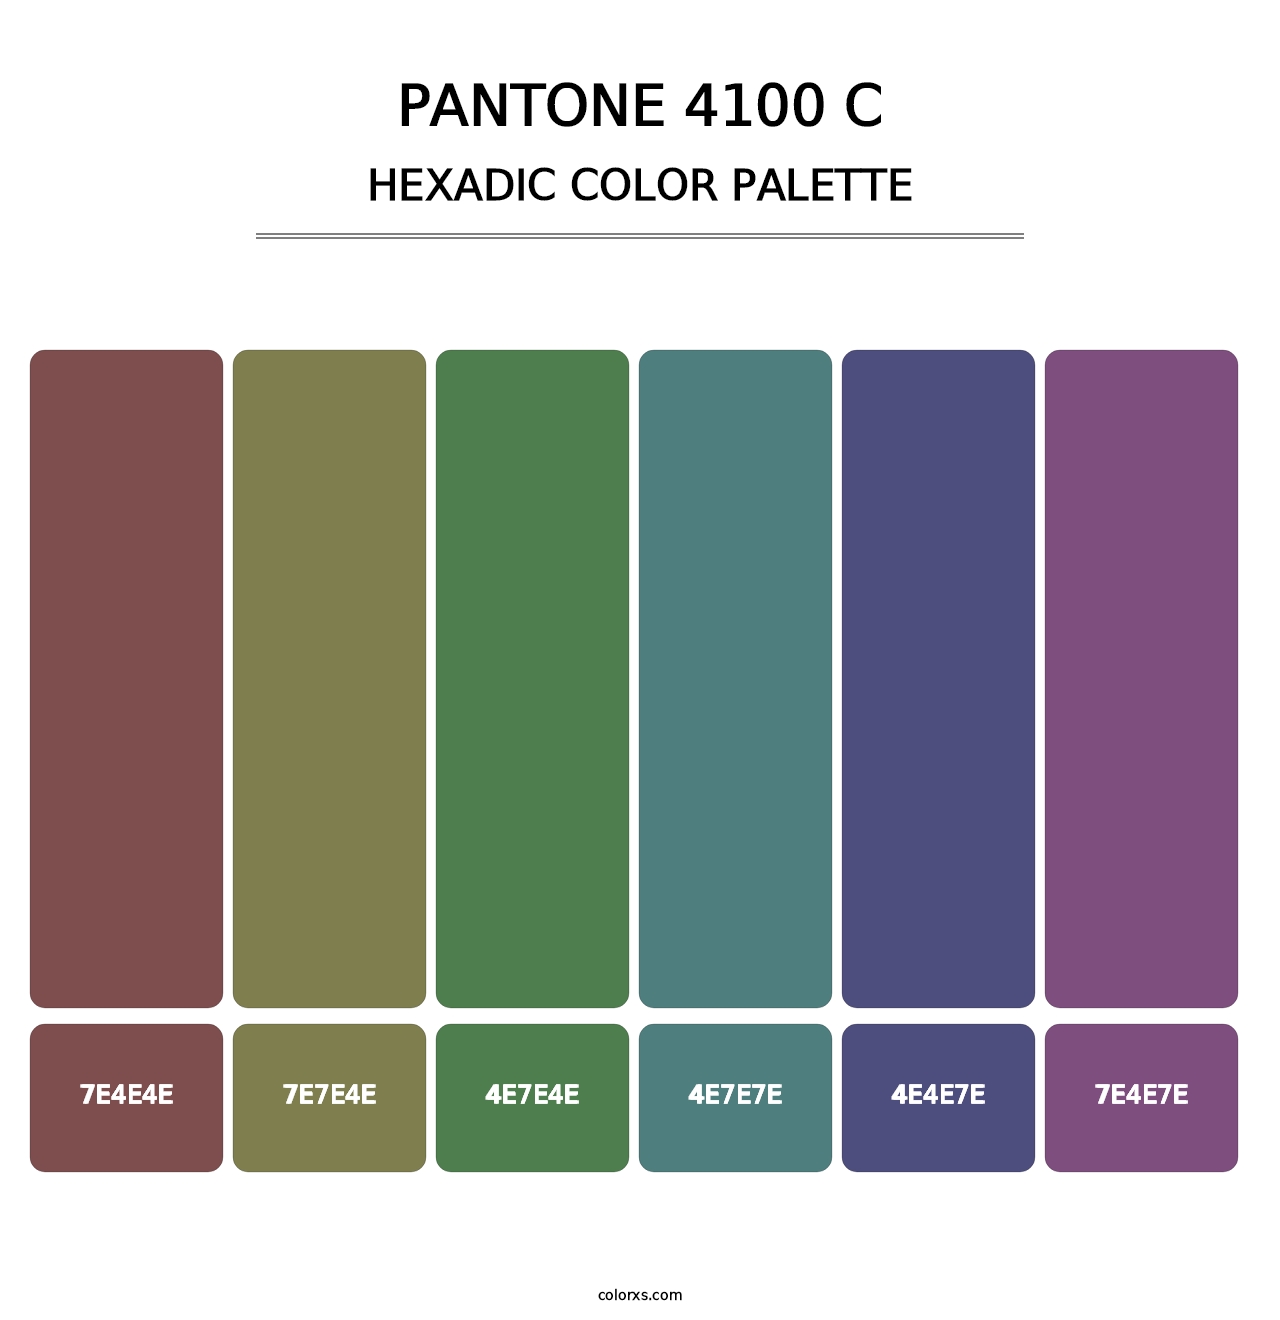 PANTONE 4100 C - Hexadic Color Palette